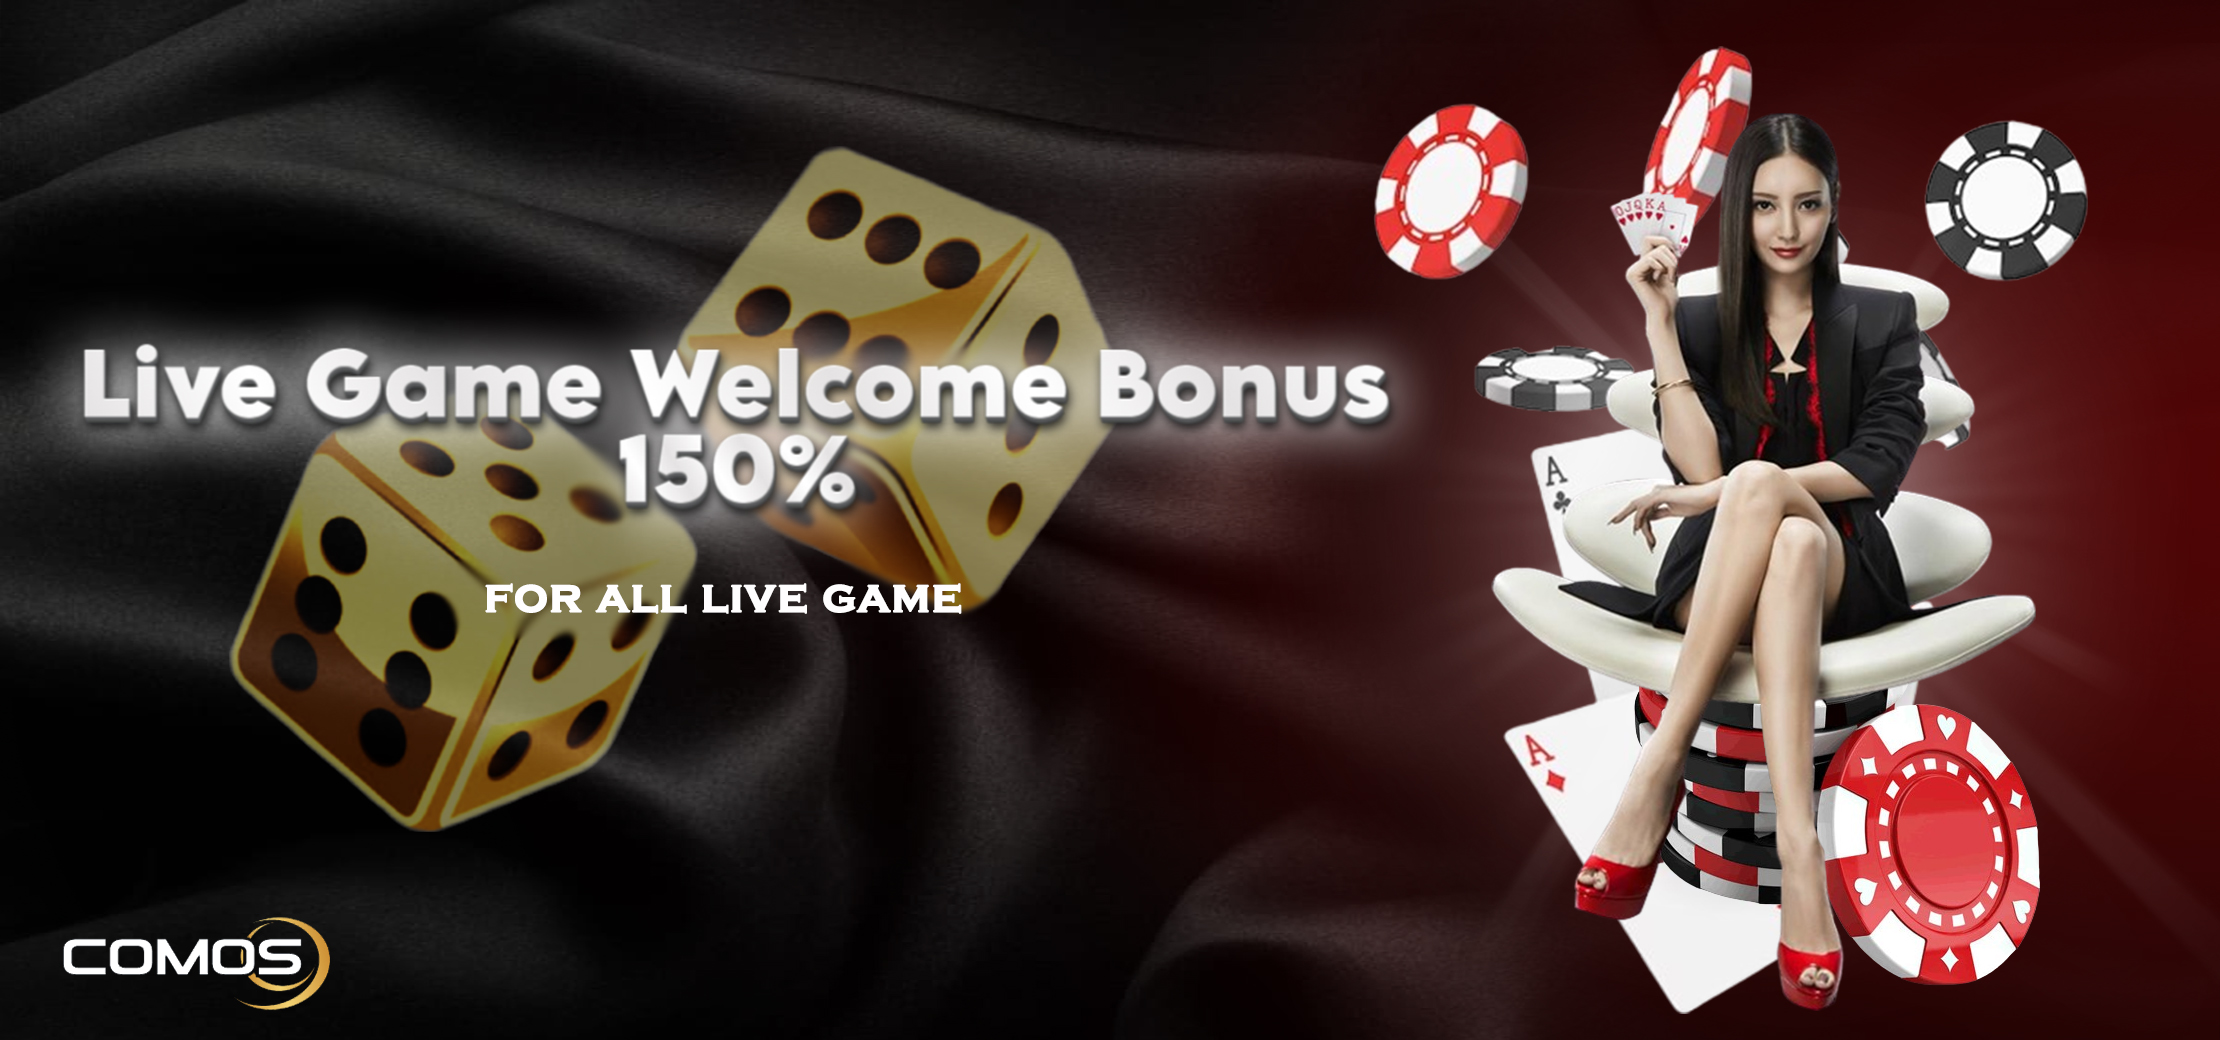 Live Game Welcome Bonus 150%